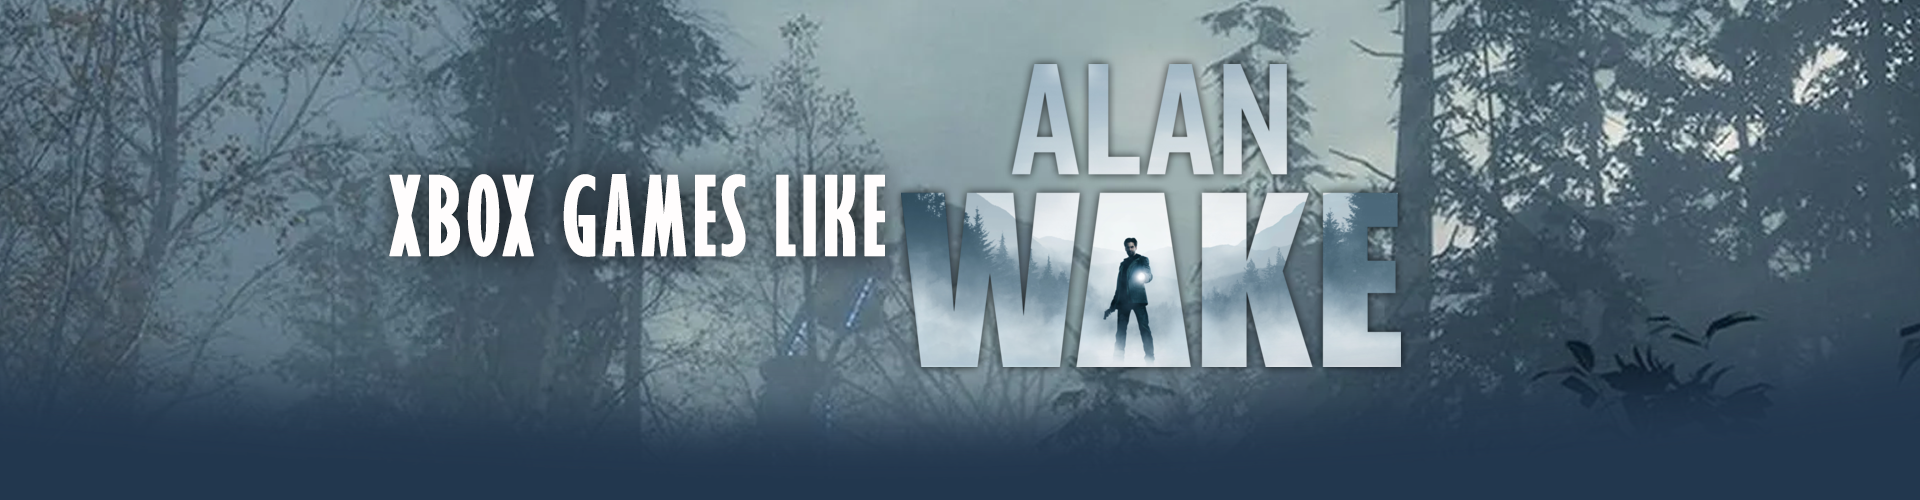 Xbox Games Like Alan Wake